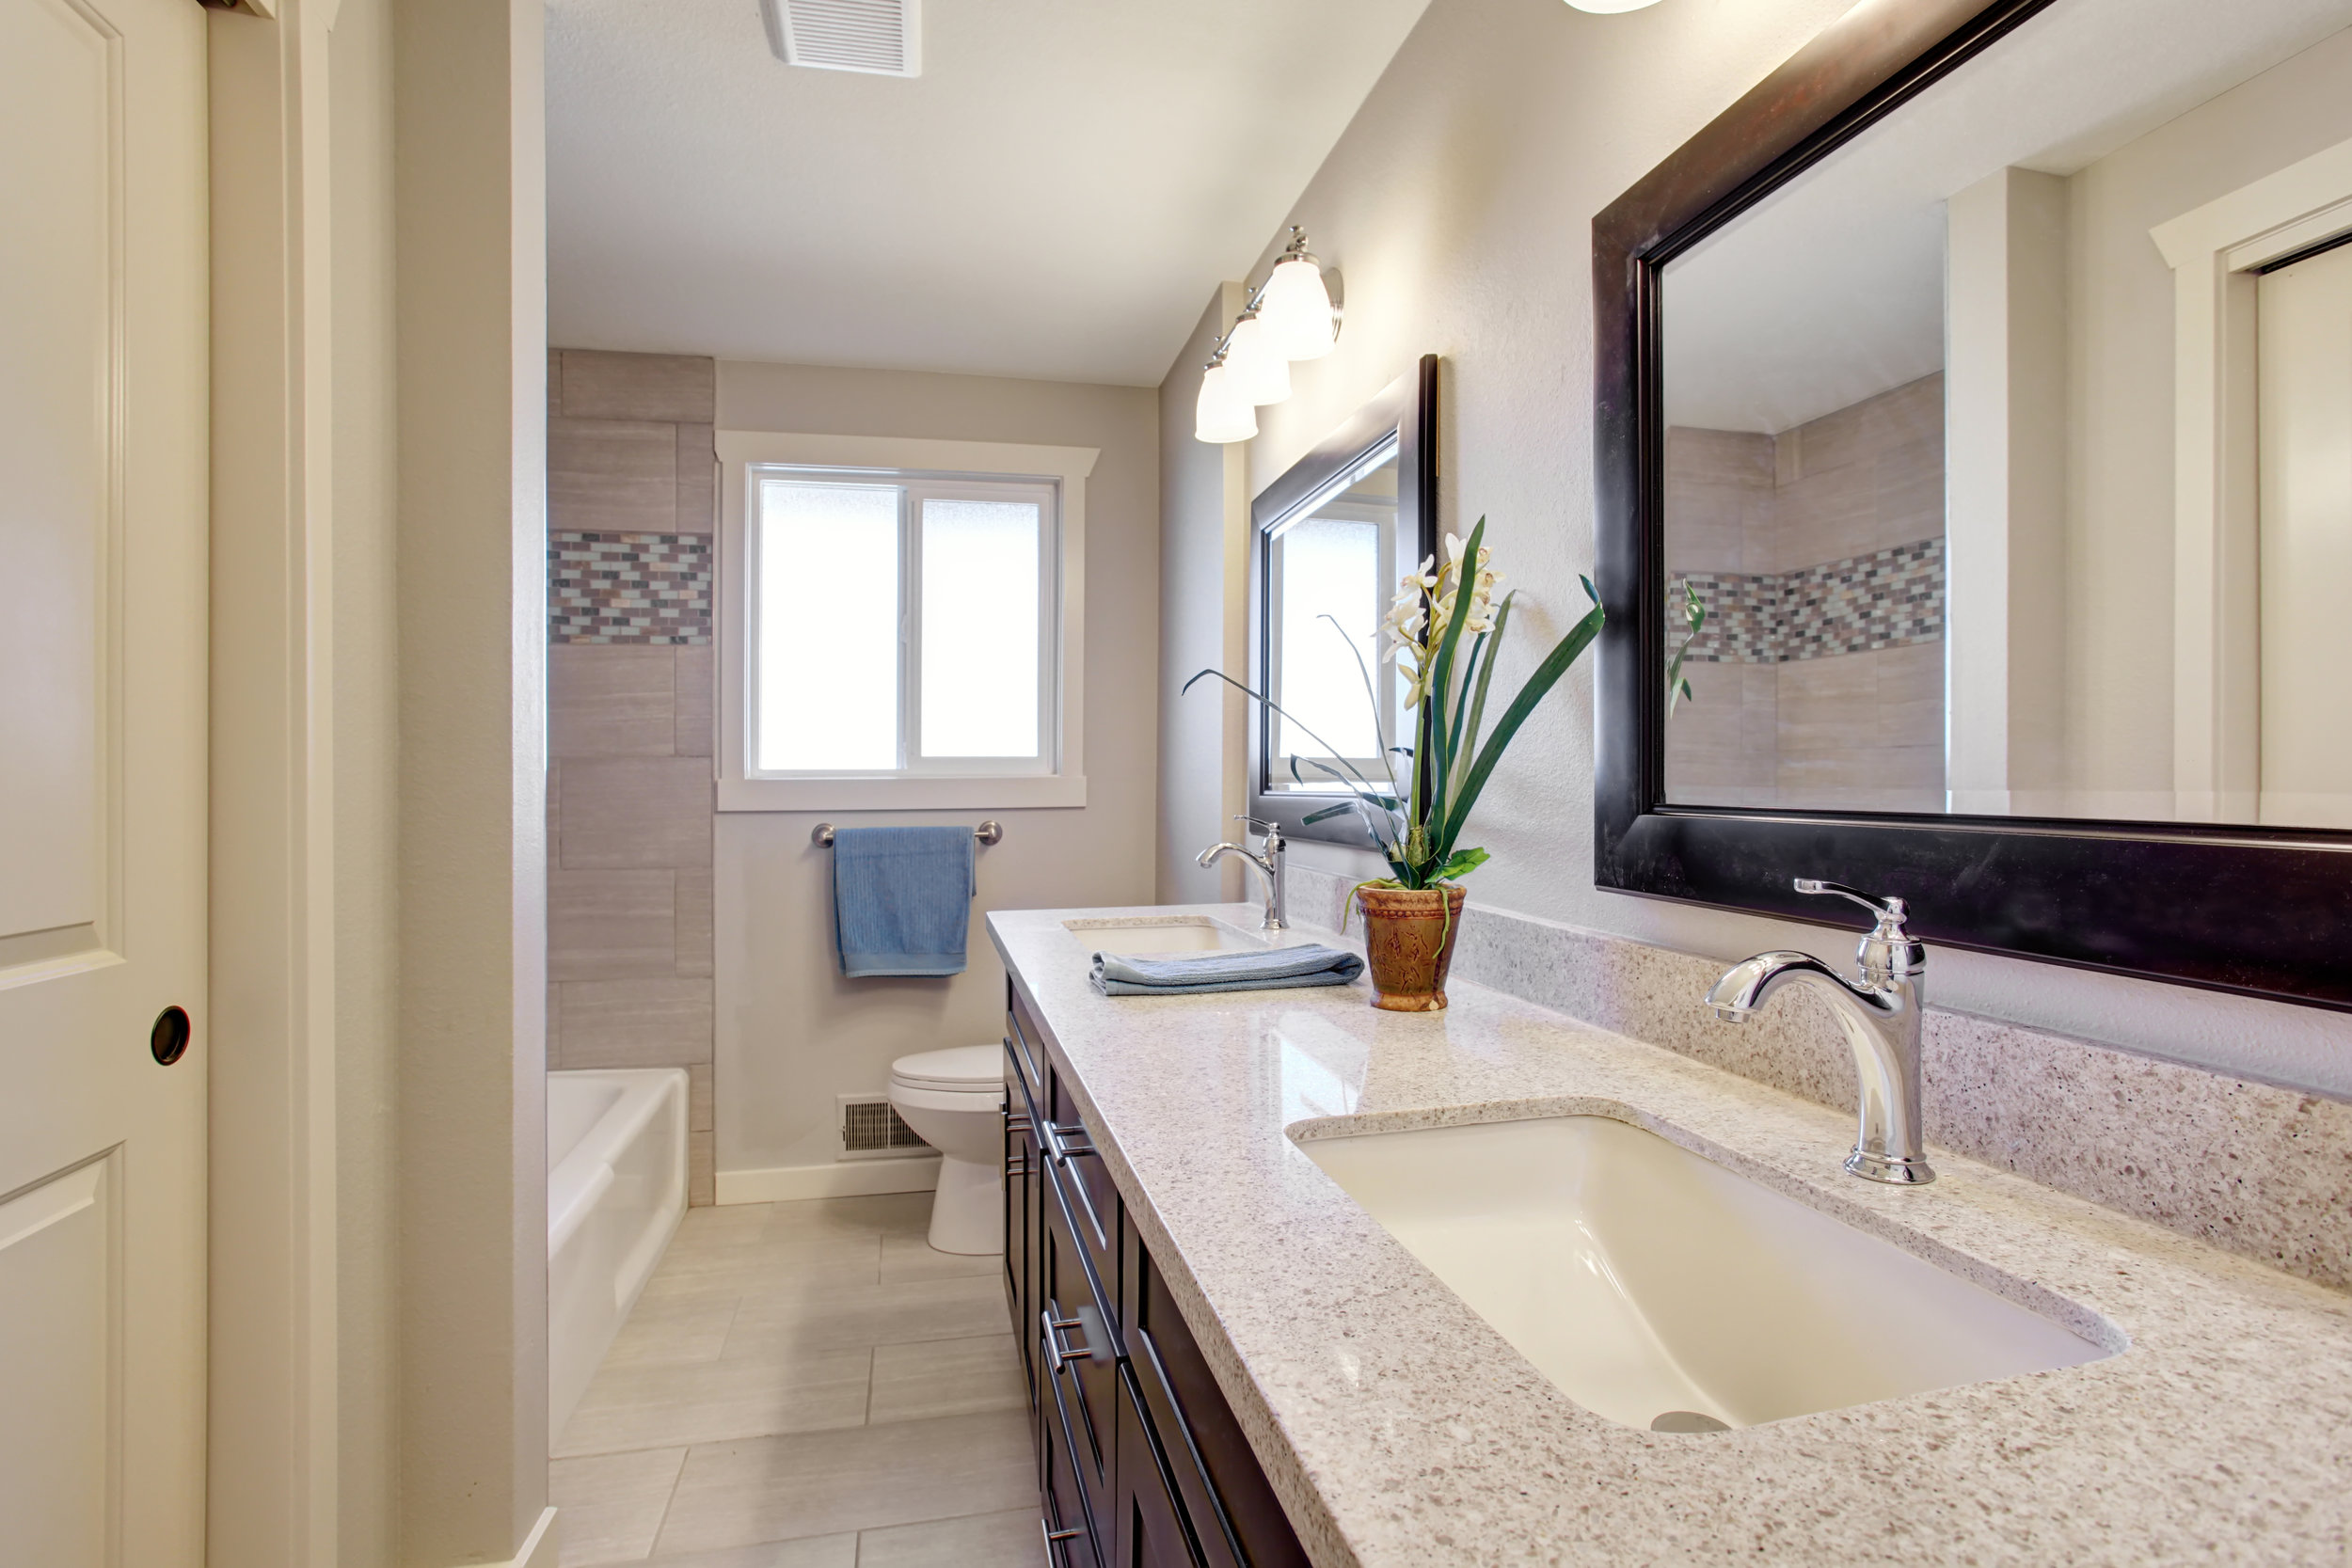 bigstock-Beautiful-Bathroom-With-Tile-F-93777899.jpg